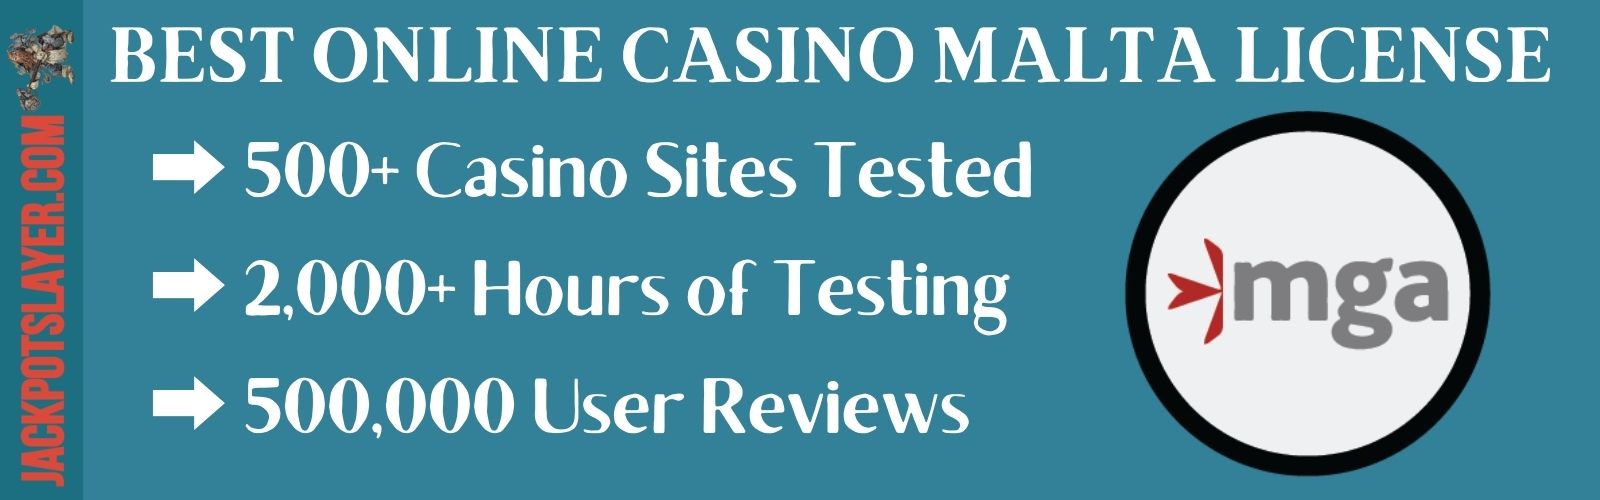 Online Casino Malta License